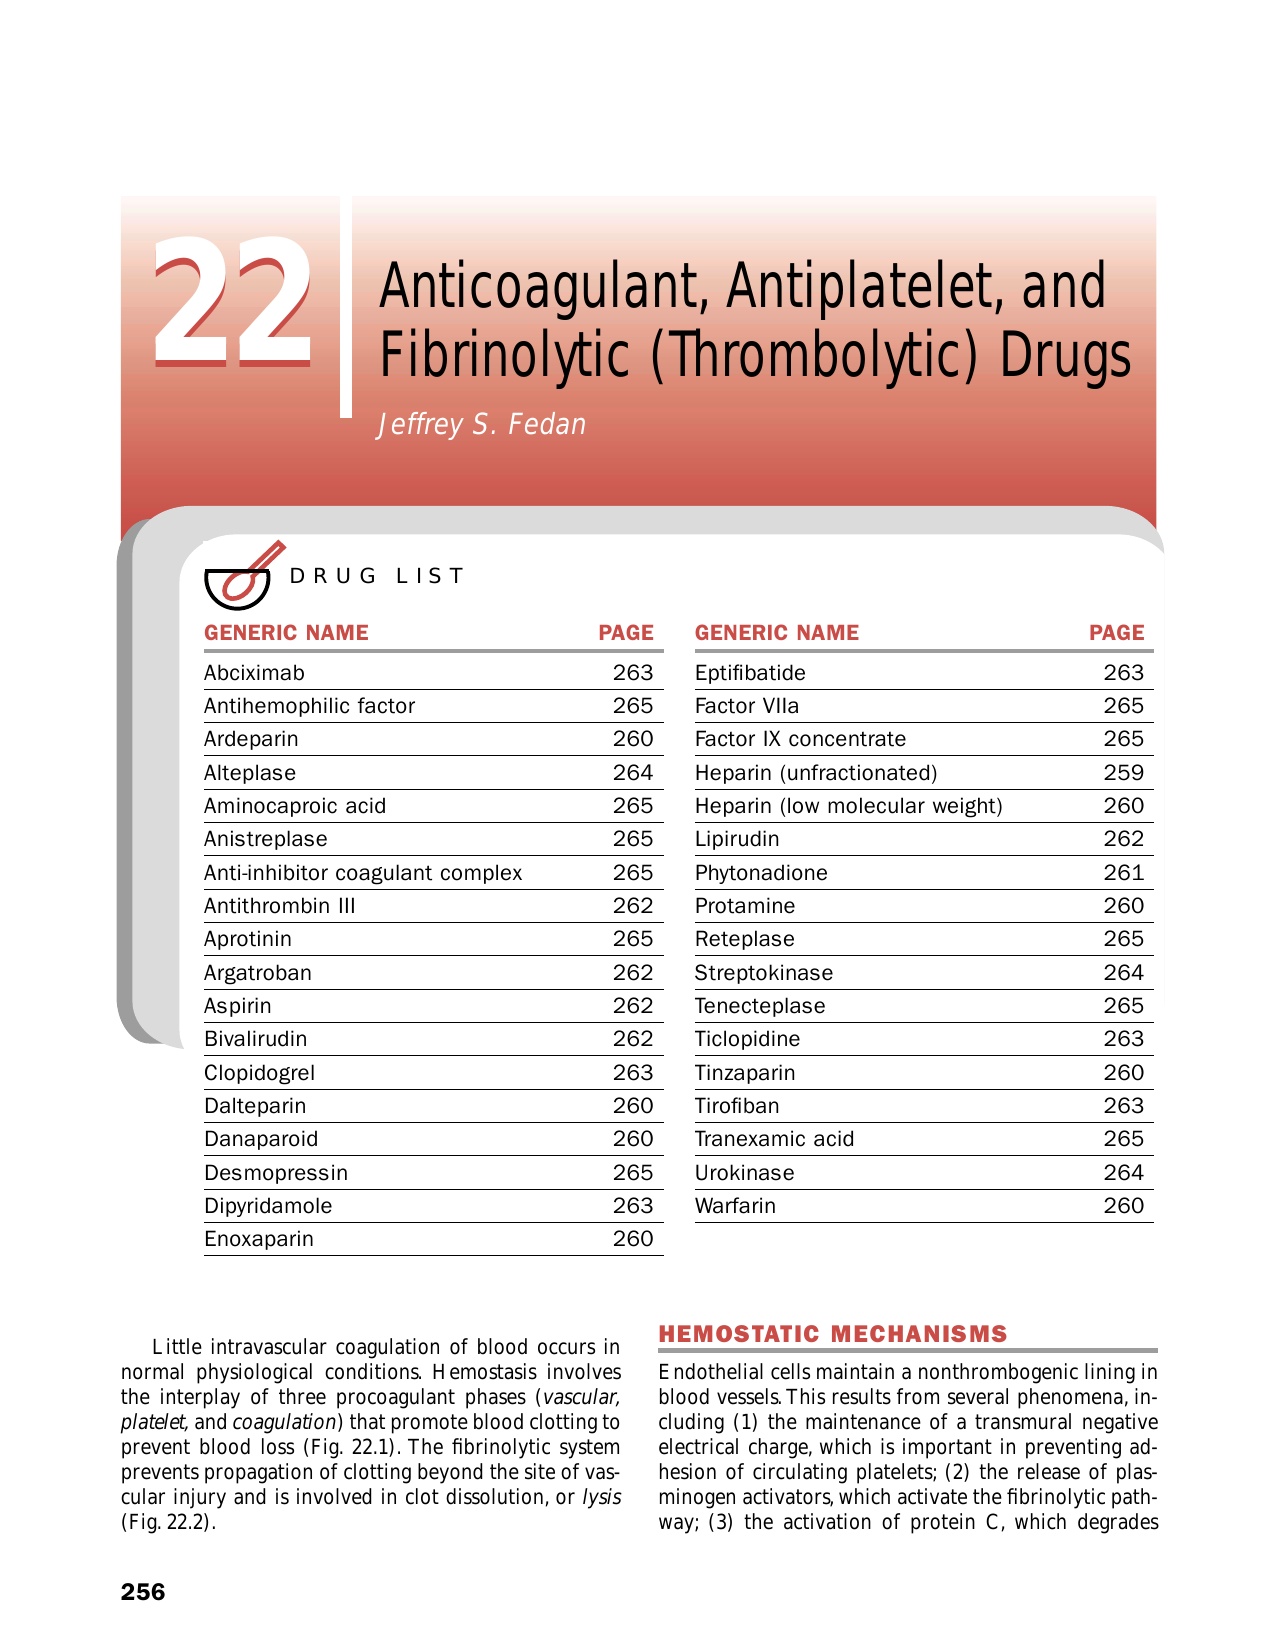 Anticoagulant Antiplatelet And Fibrinolytic Thrombolytic Drugs